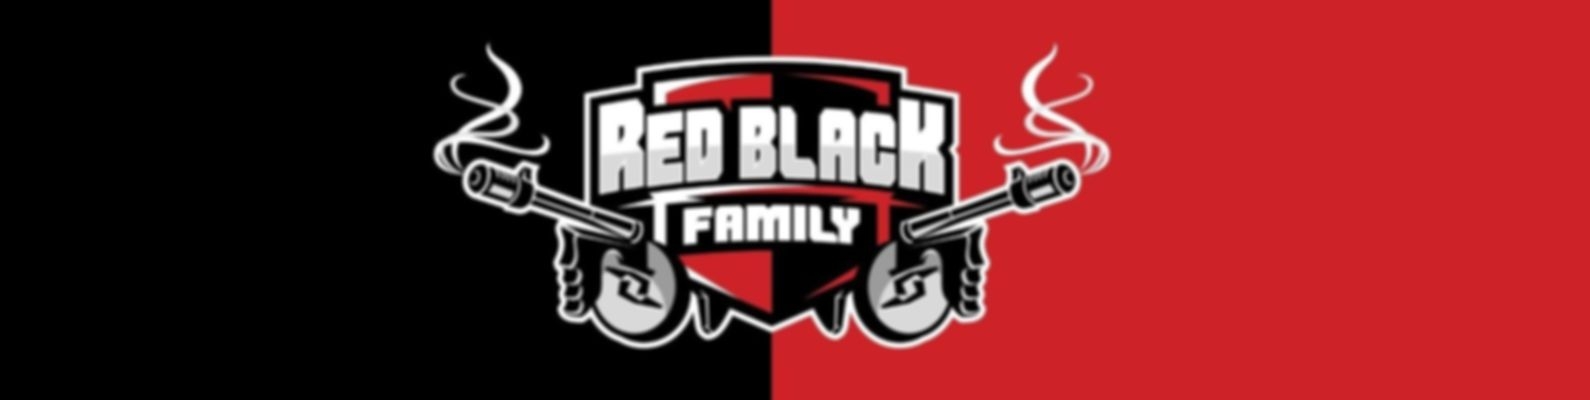 Red Black Family Саратов - фото